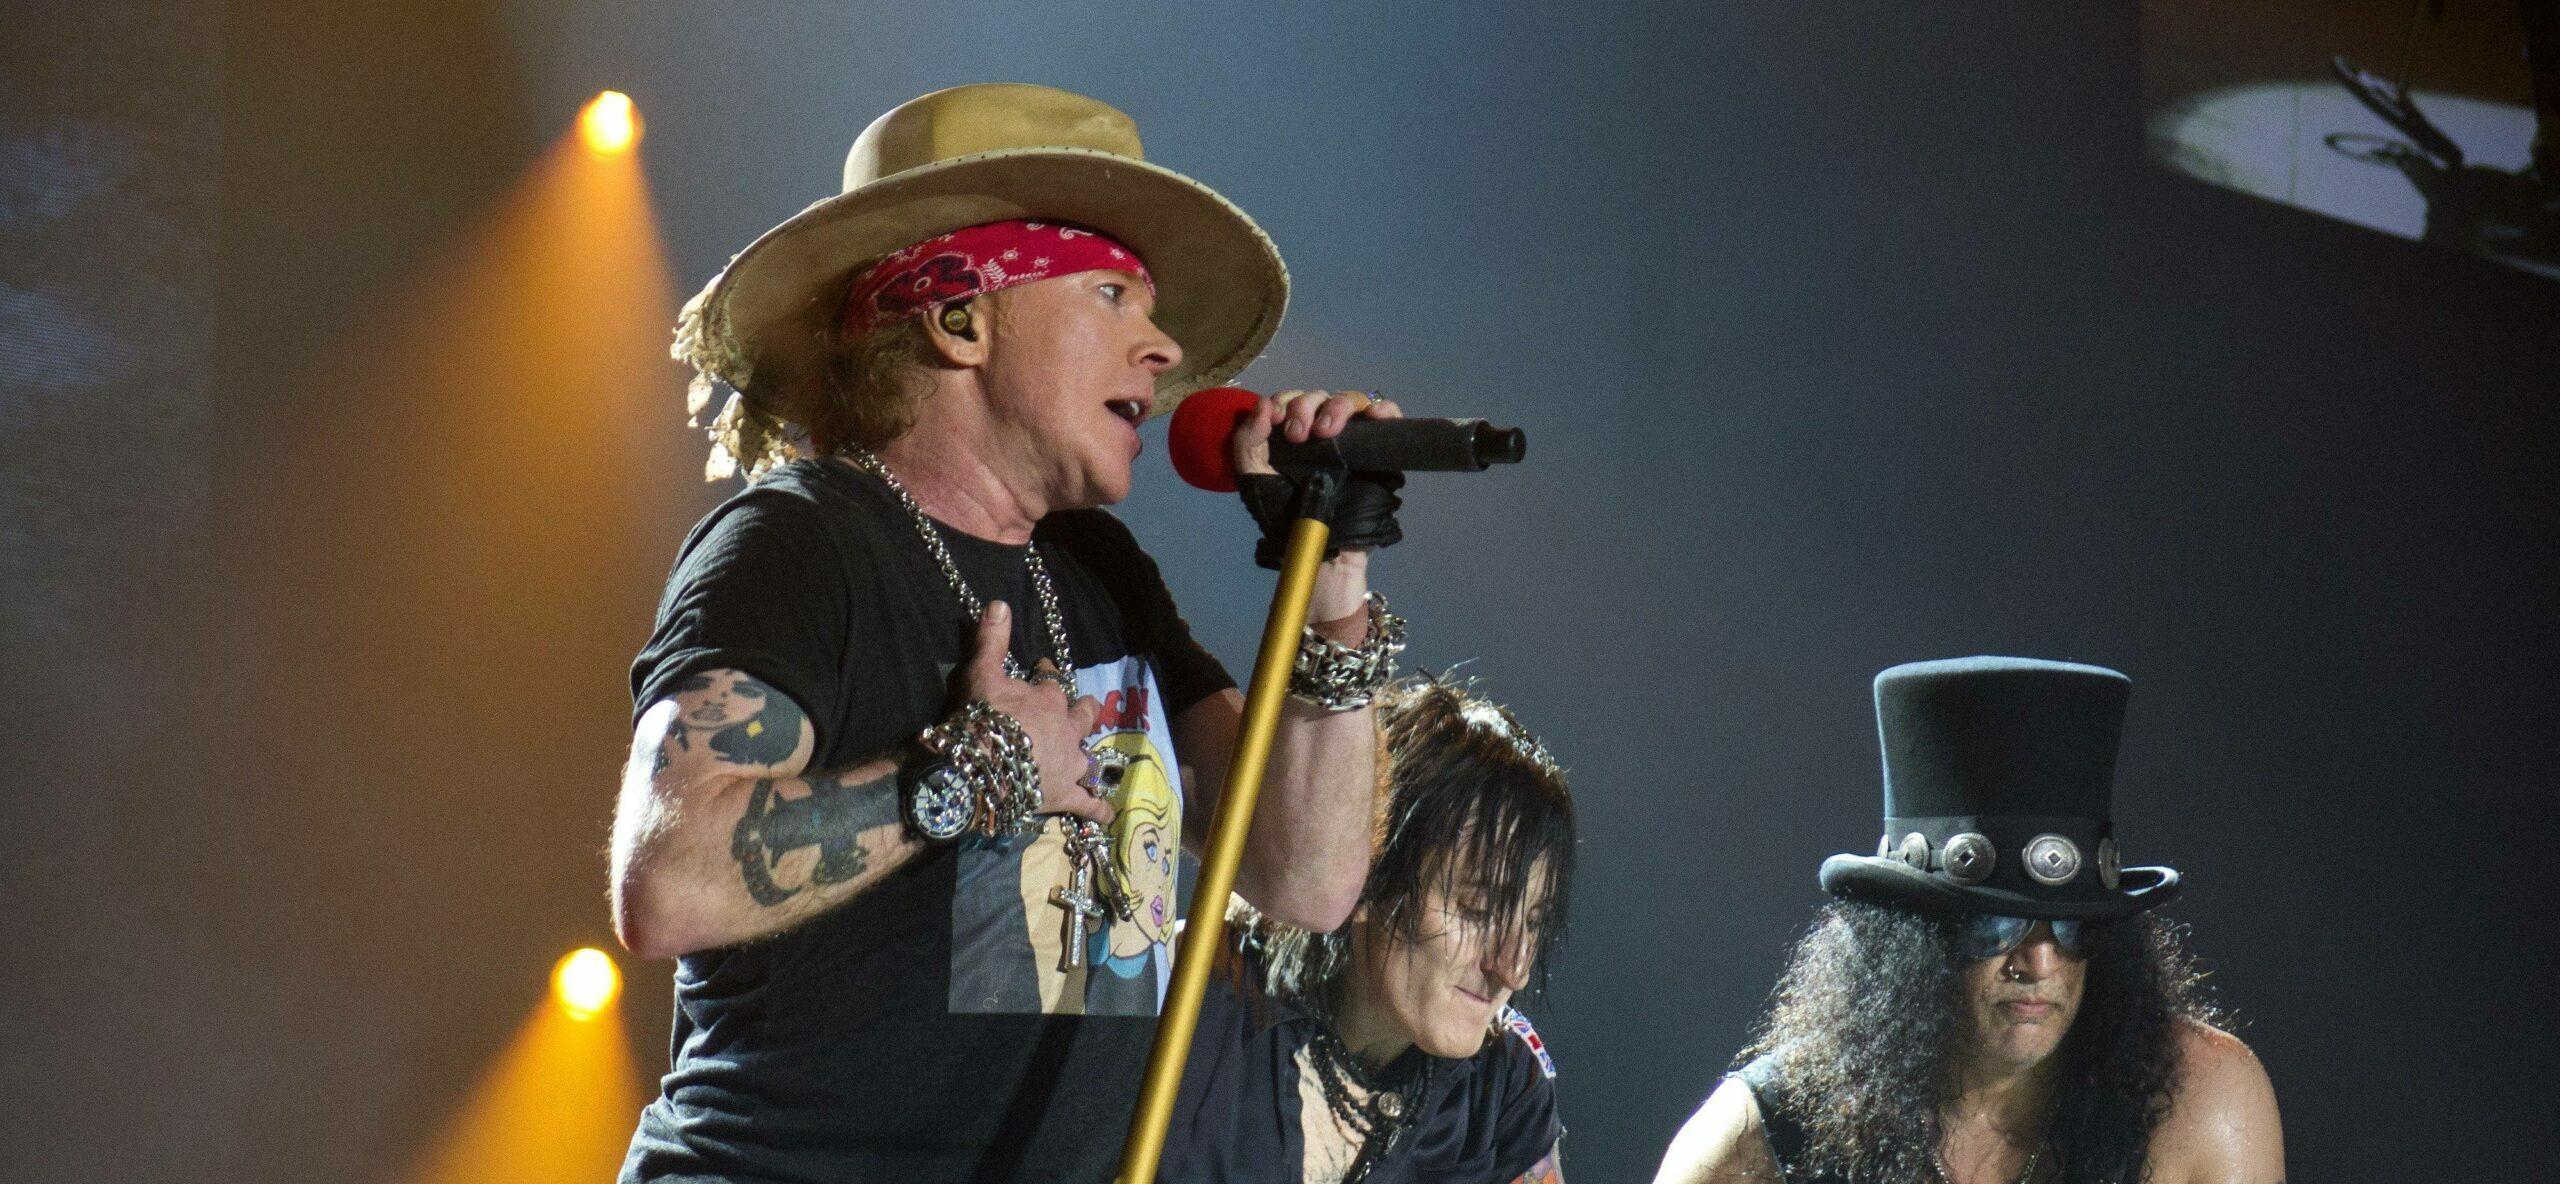 Axl Rose at a Guns N Roses concert